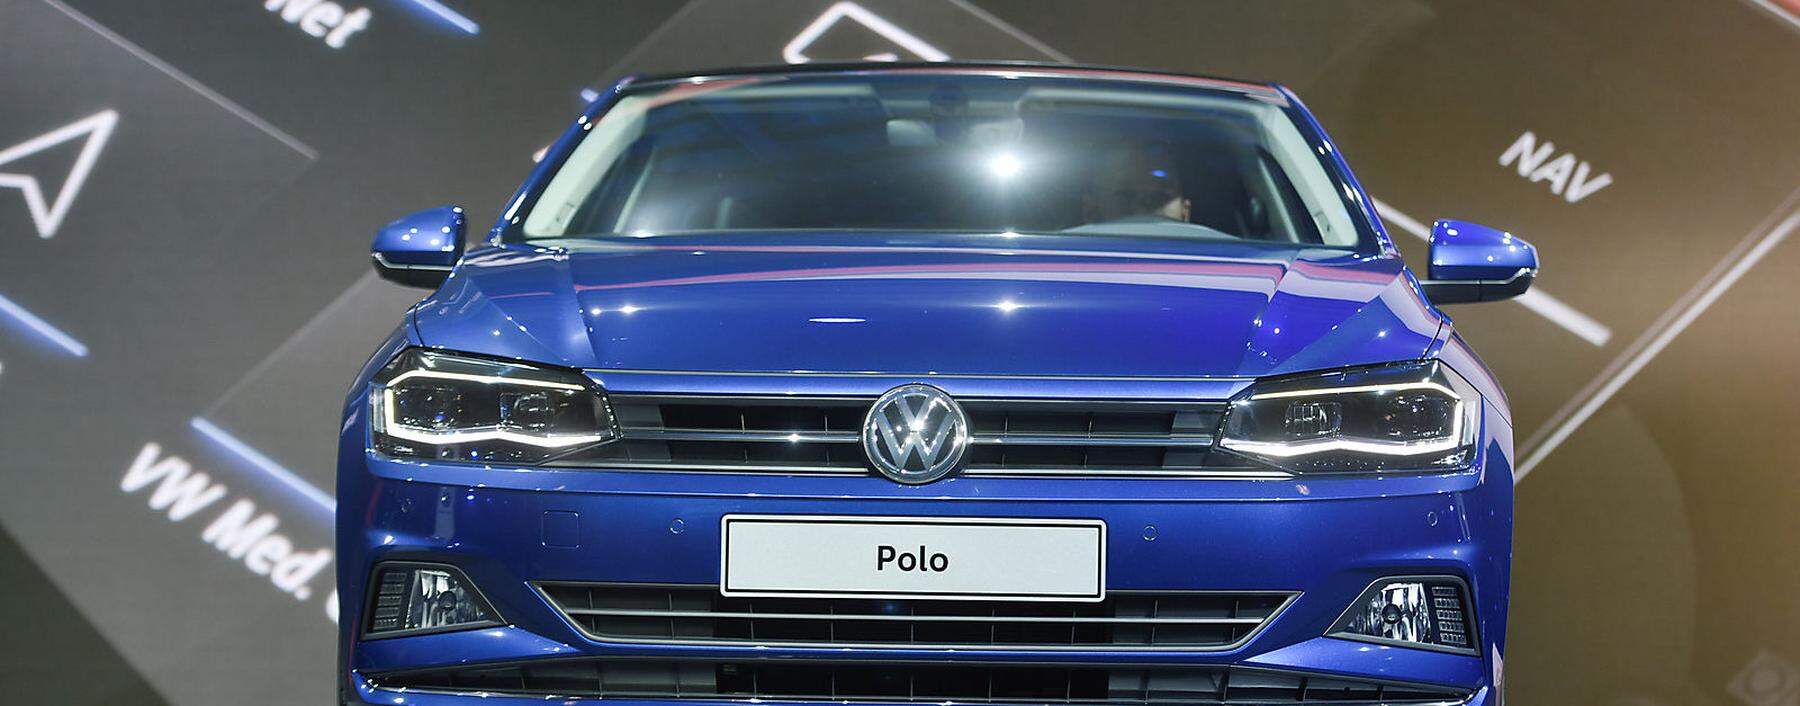 Presentation of Volkswagen's new Polo